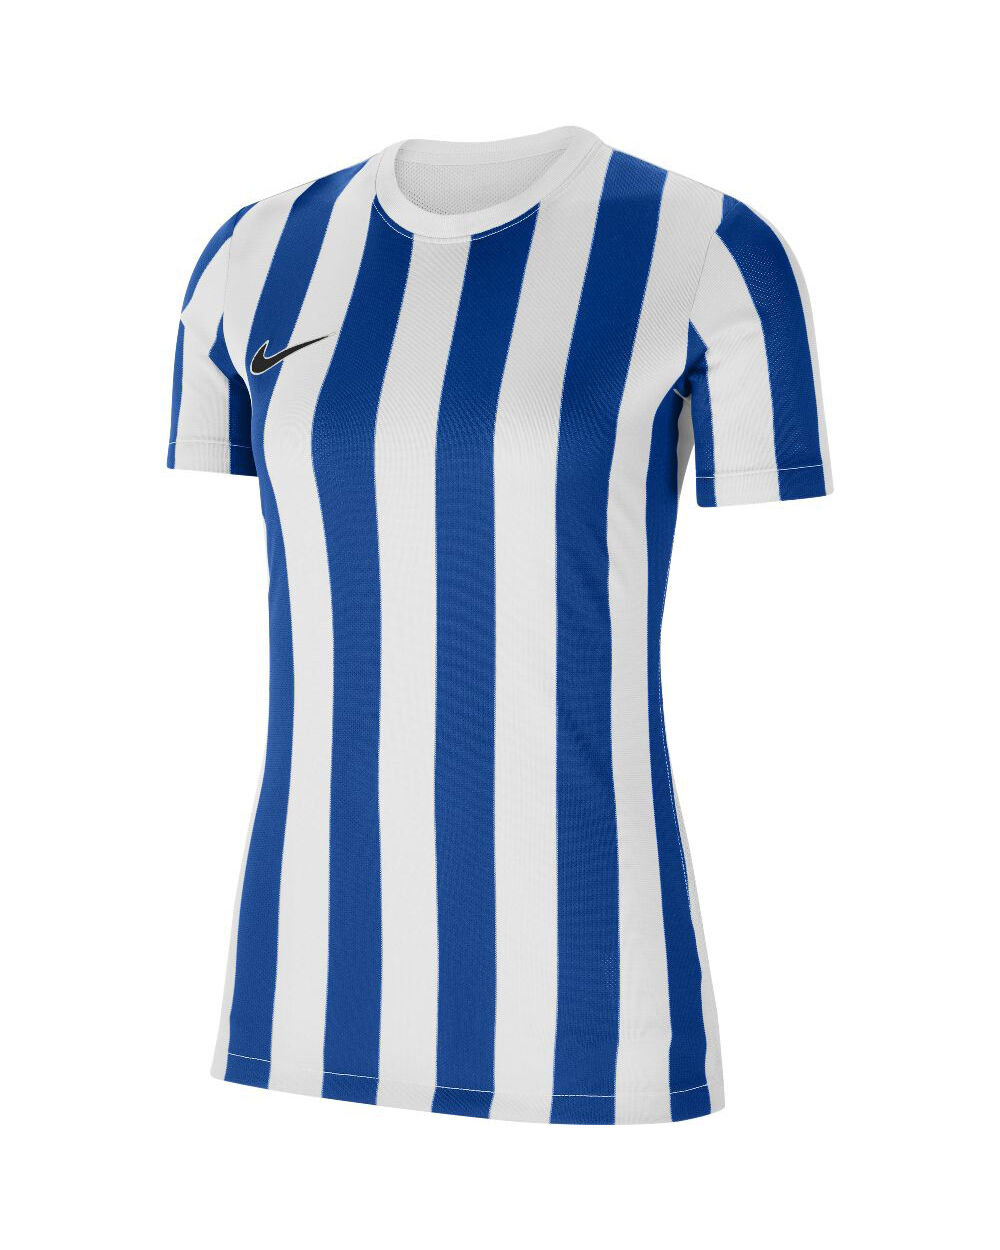 Camiseta Nike Striped Division IV Blanco y Azul Real para Mujeres - CW3816-102